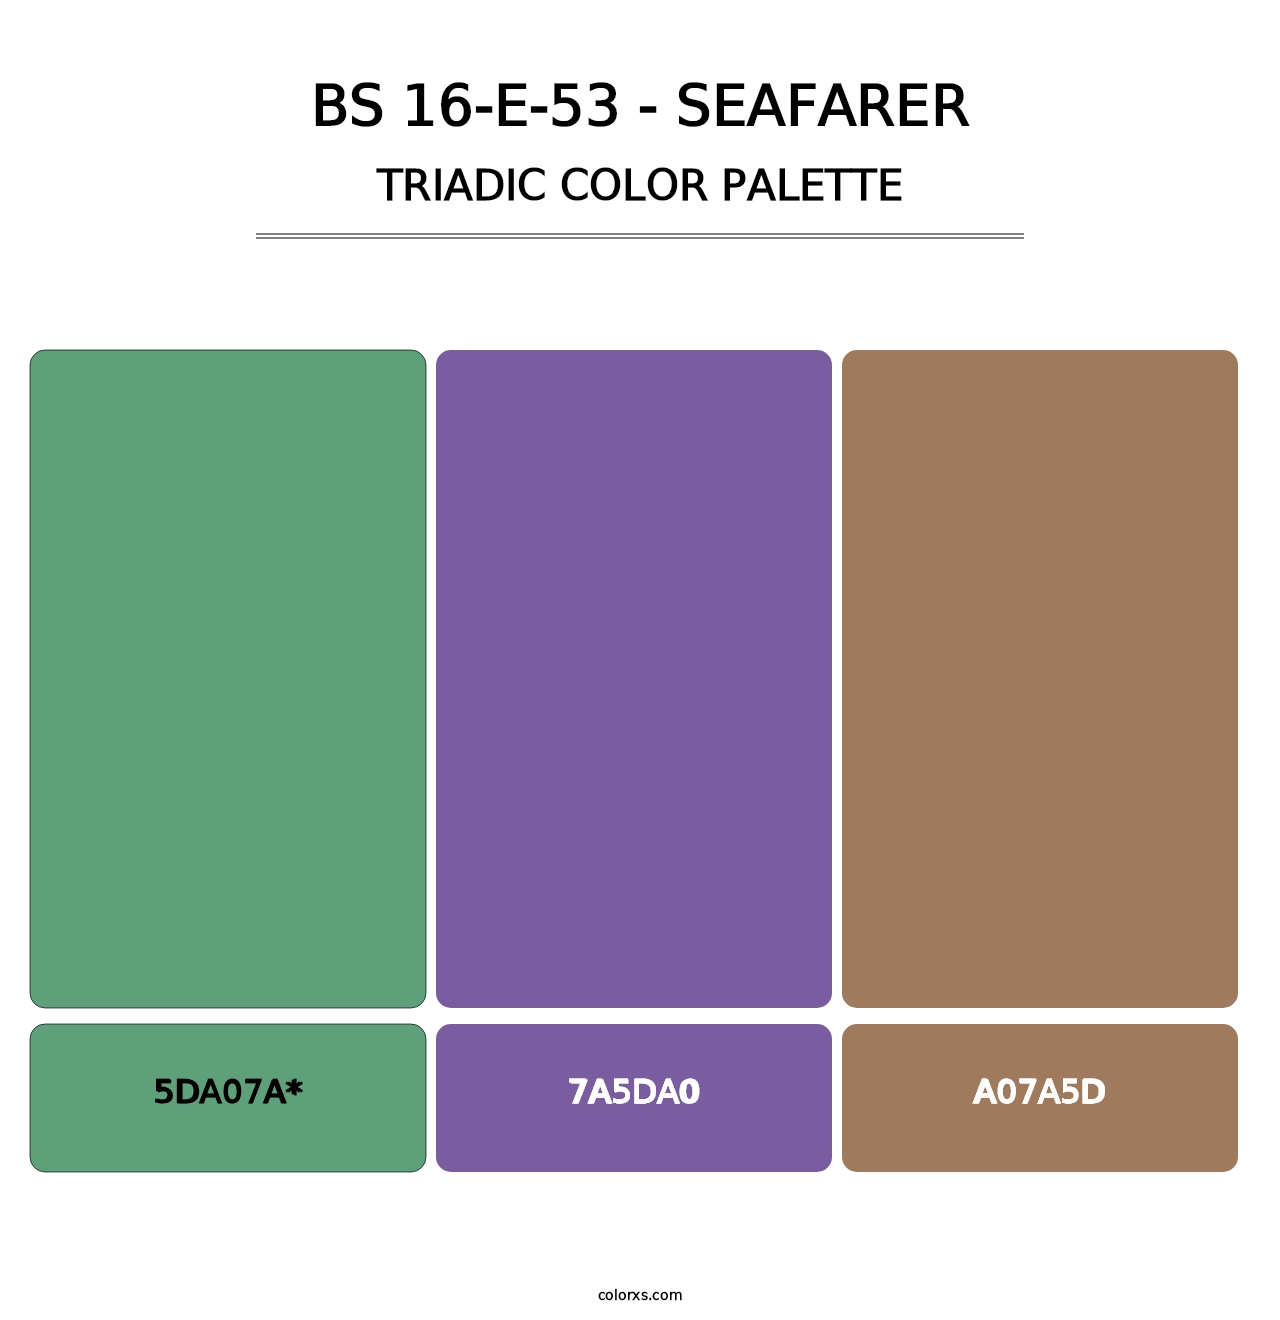 BS 16-E-53 - Seafarer - Triadic Color Palette